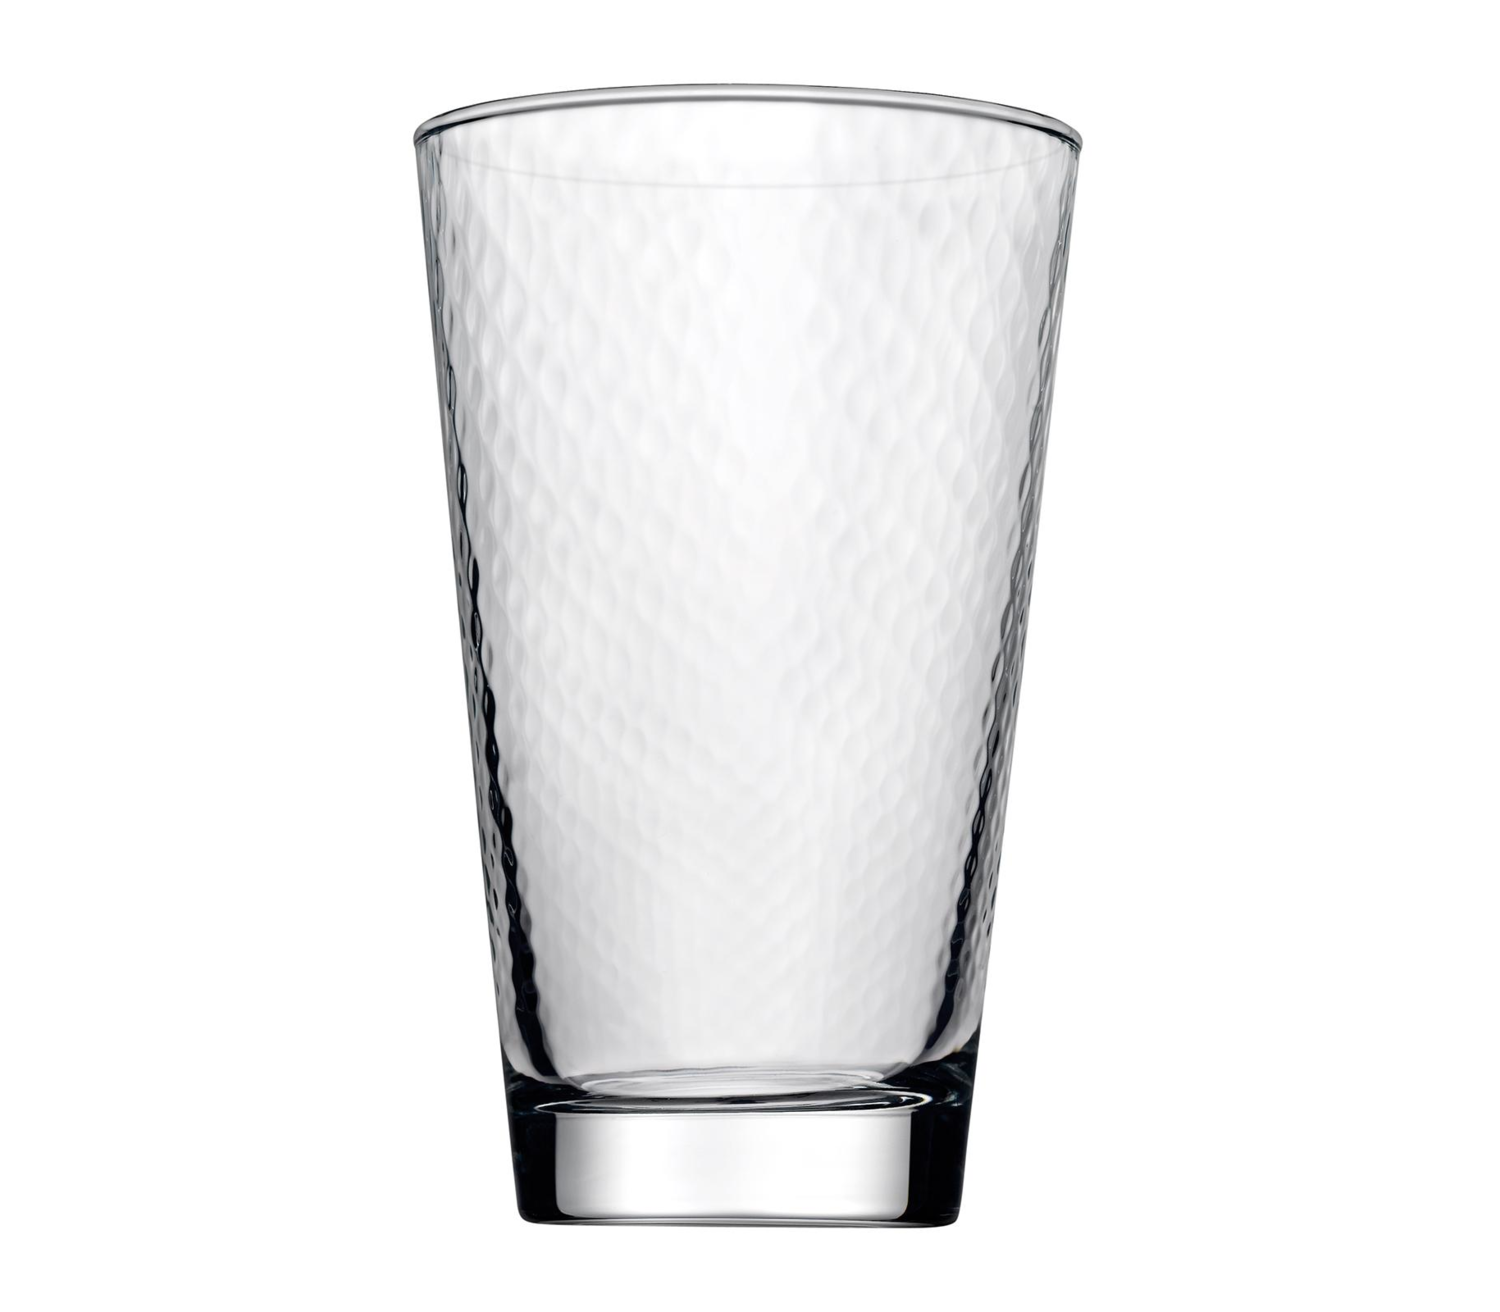 Olson's Pint Glass